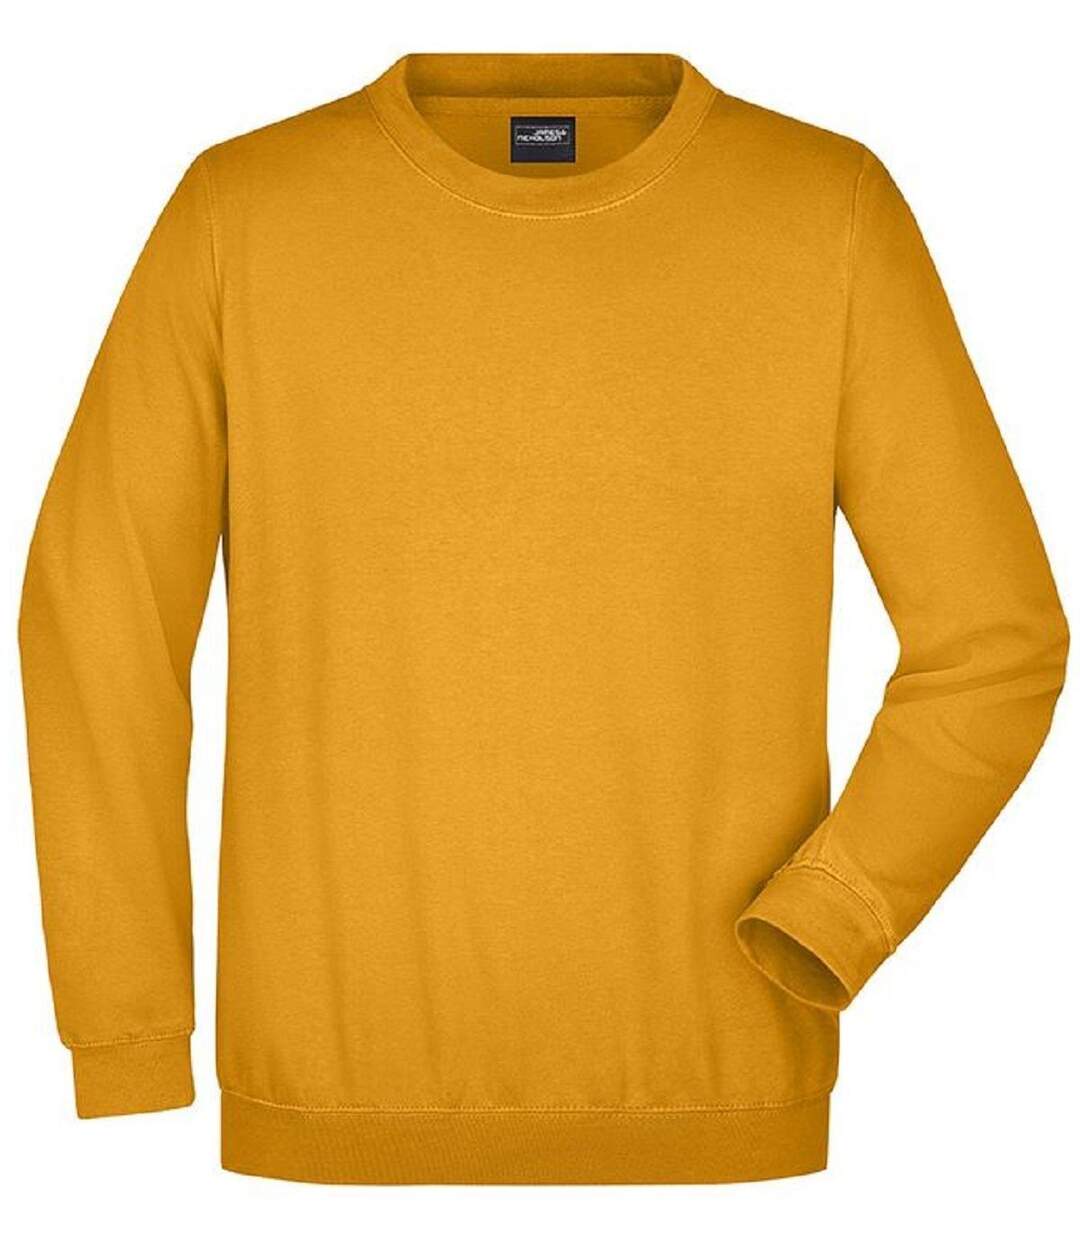 Sweat-shirt col rond - JN040 - jaune d'or - mixte homme femme